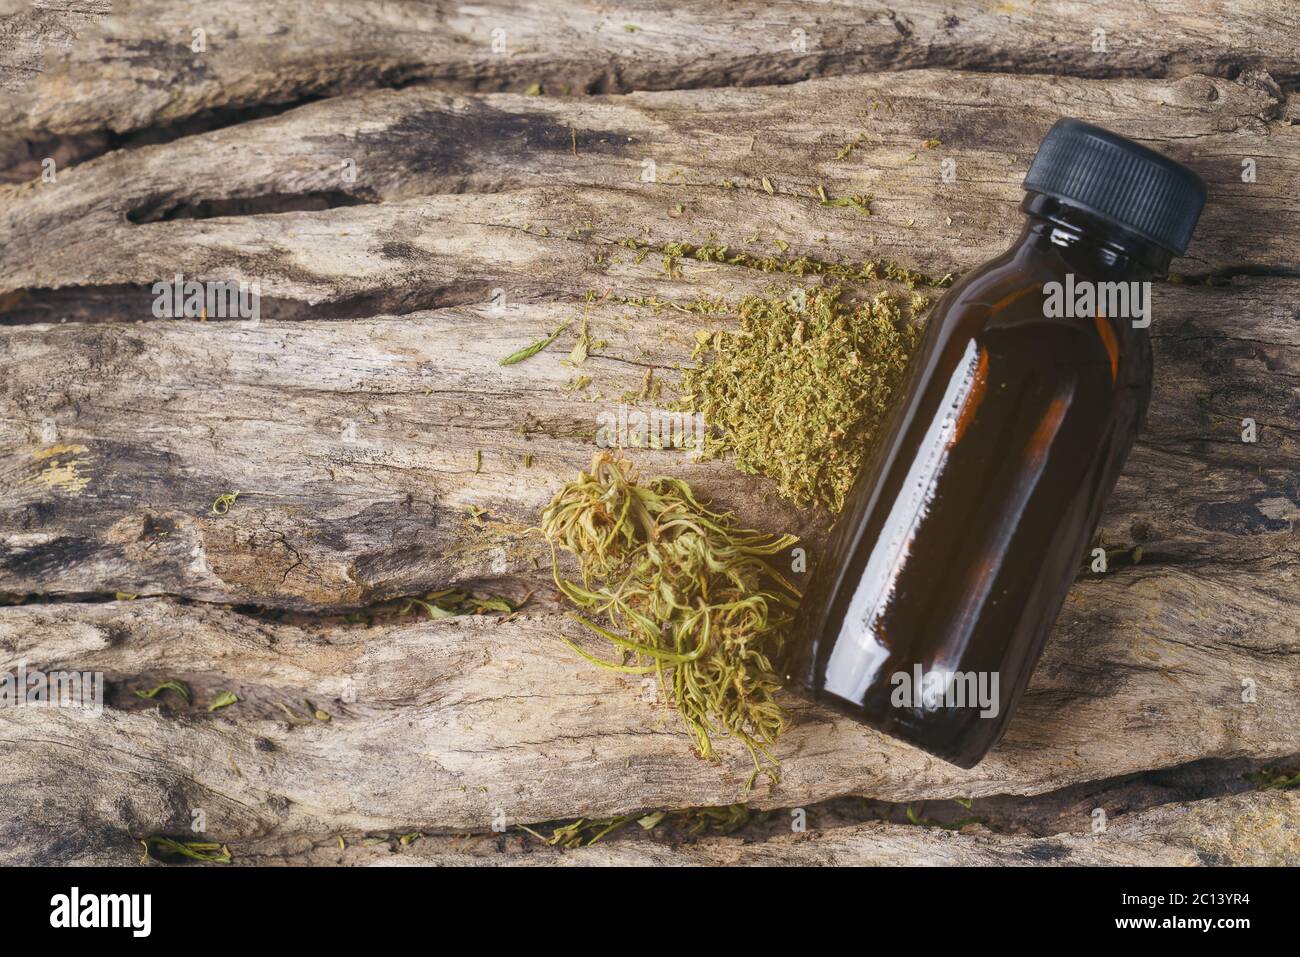 dried cannabis medical marijuana with CBD and THC extract Stock Photo